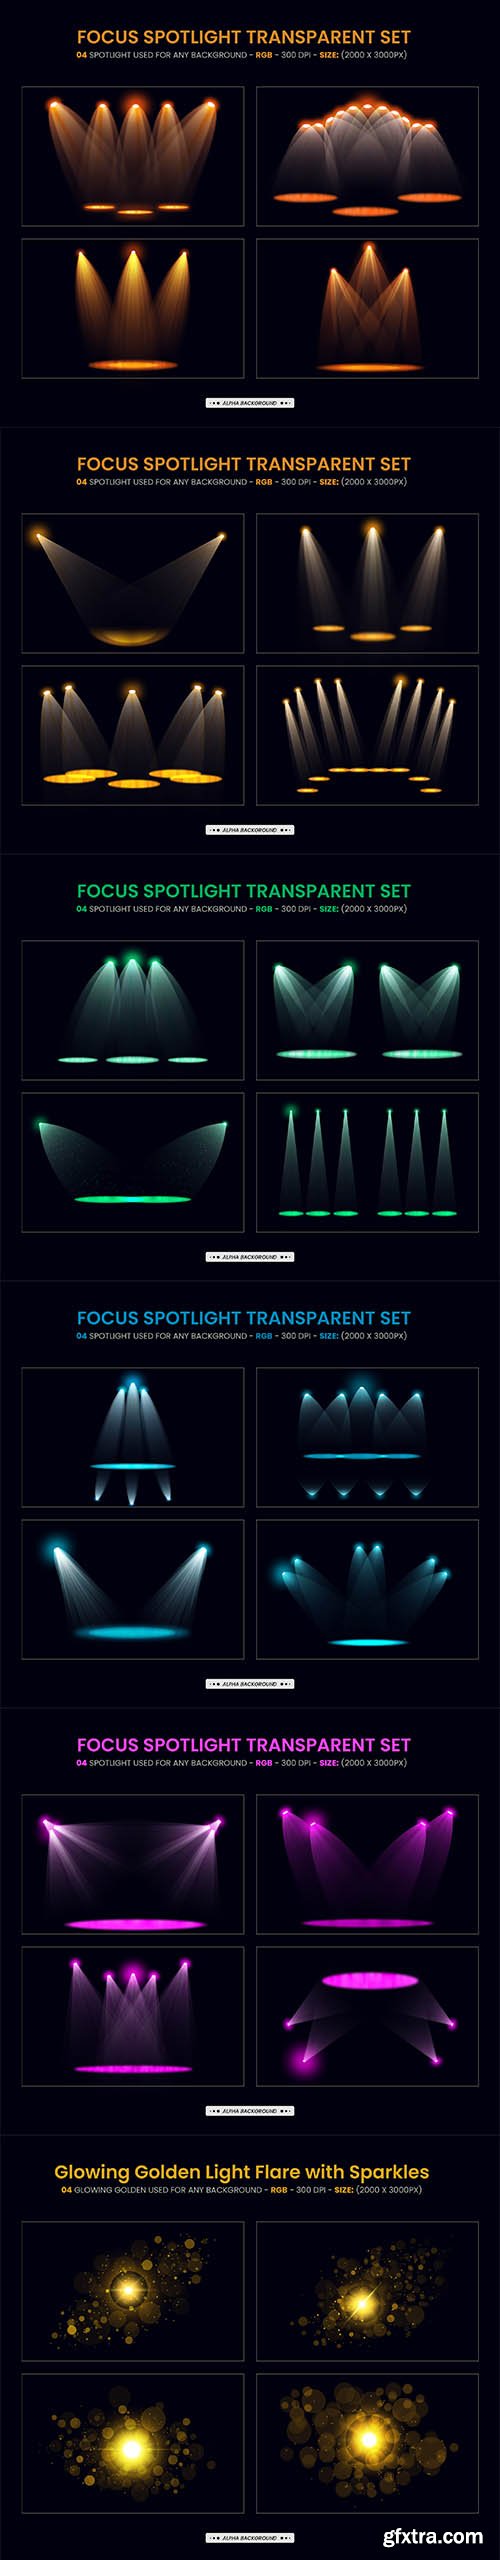 Focus spotlight effect background